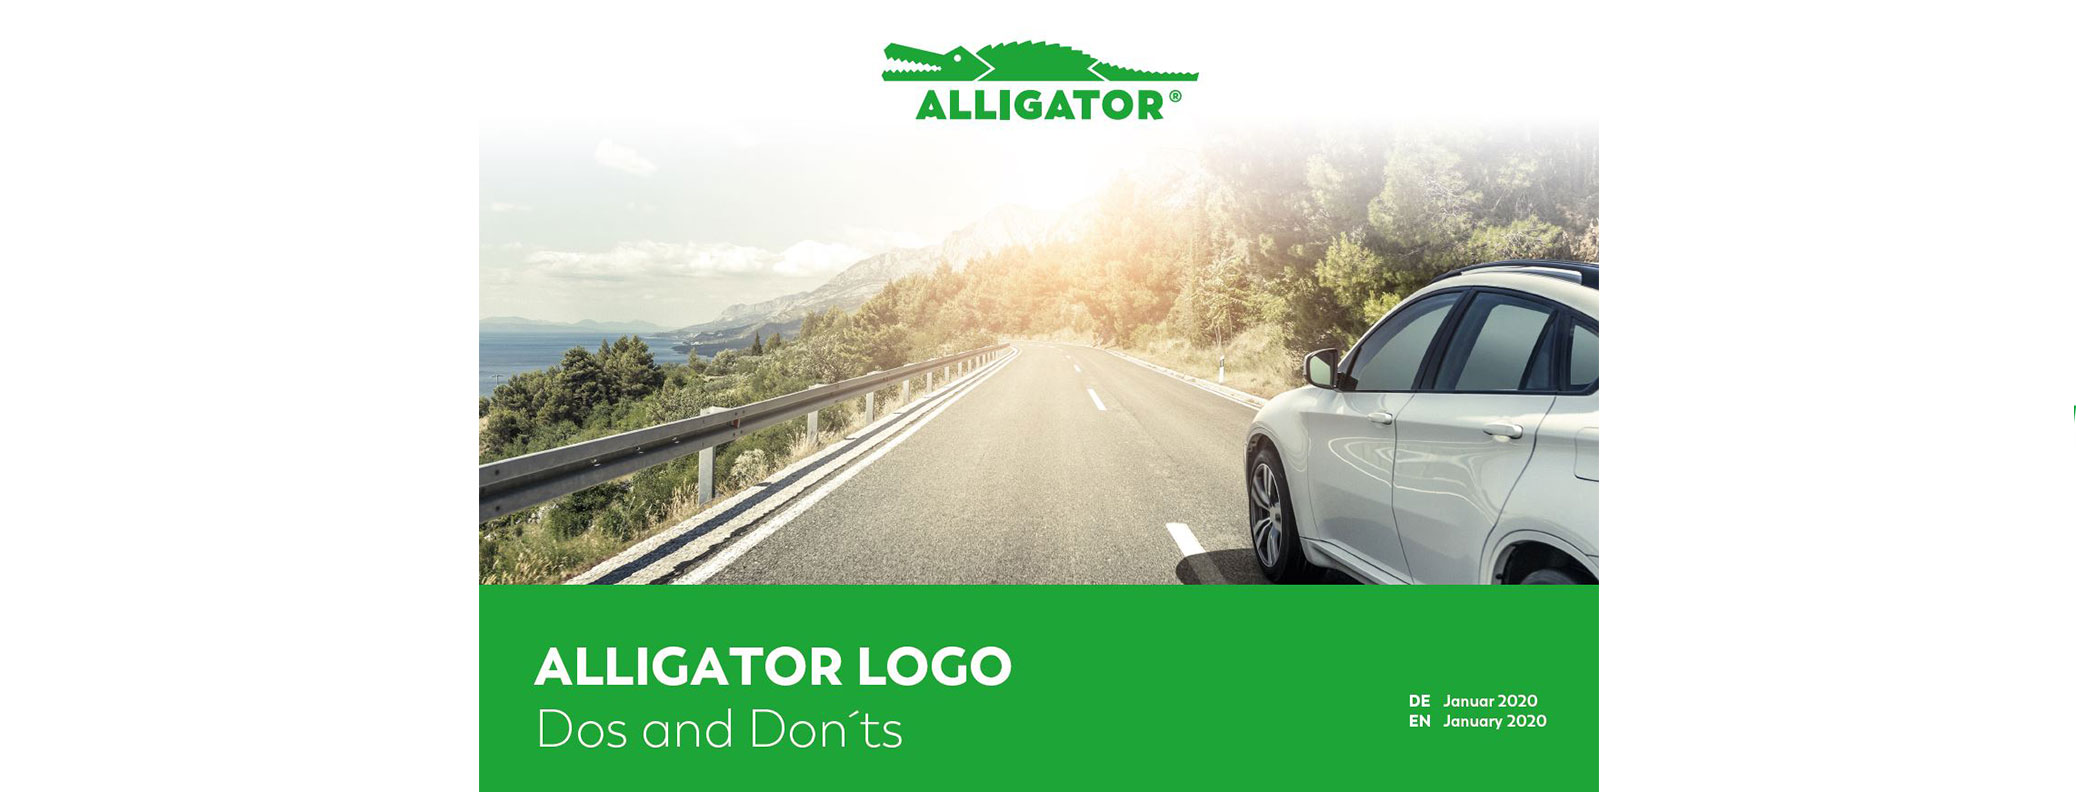 ALLIGATOR Logo - Dos and Don'ts